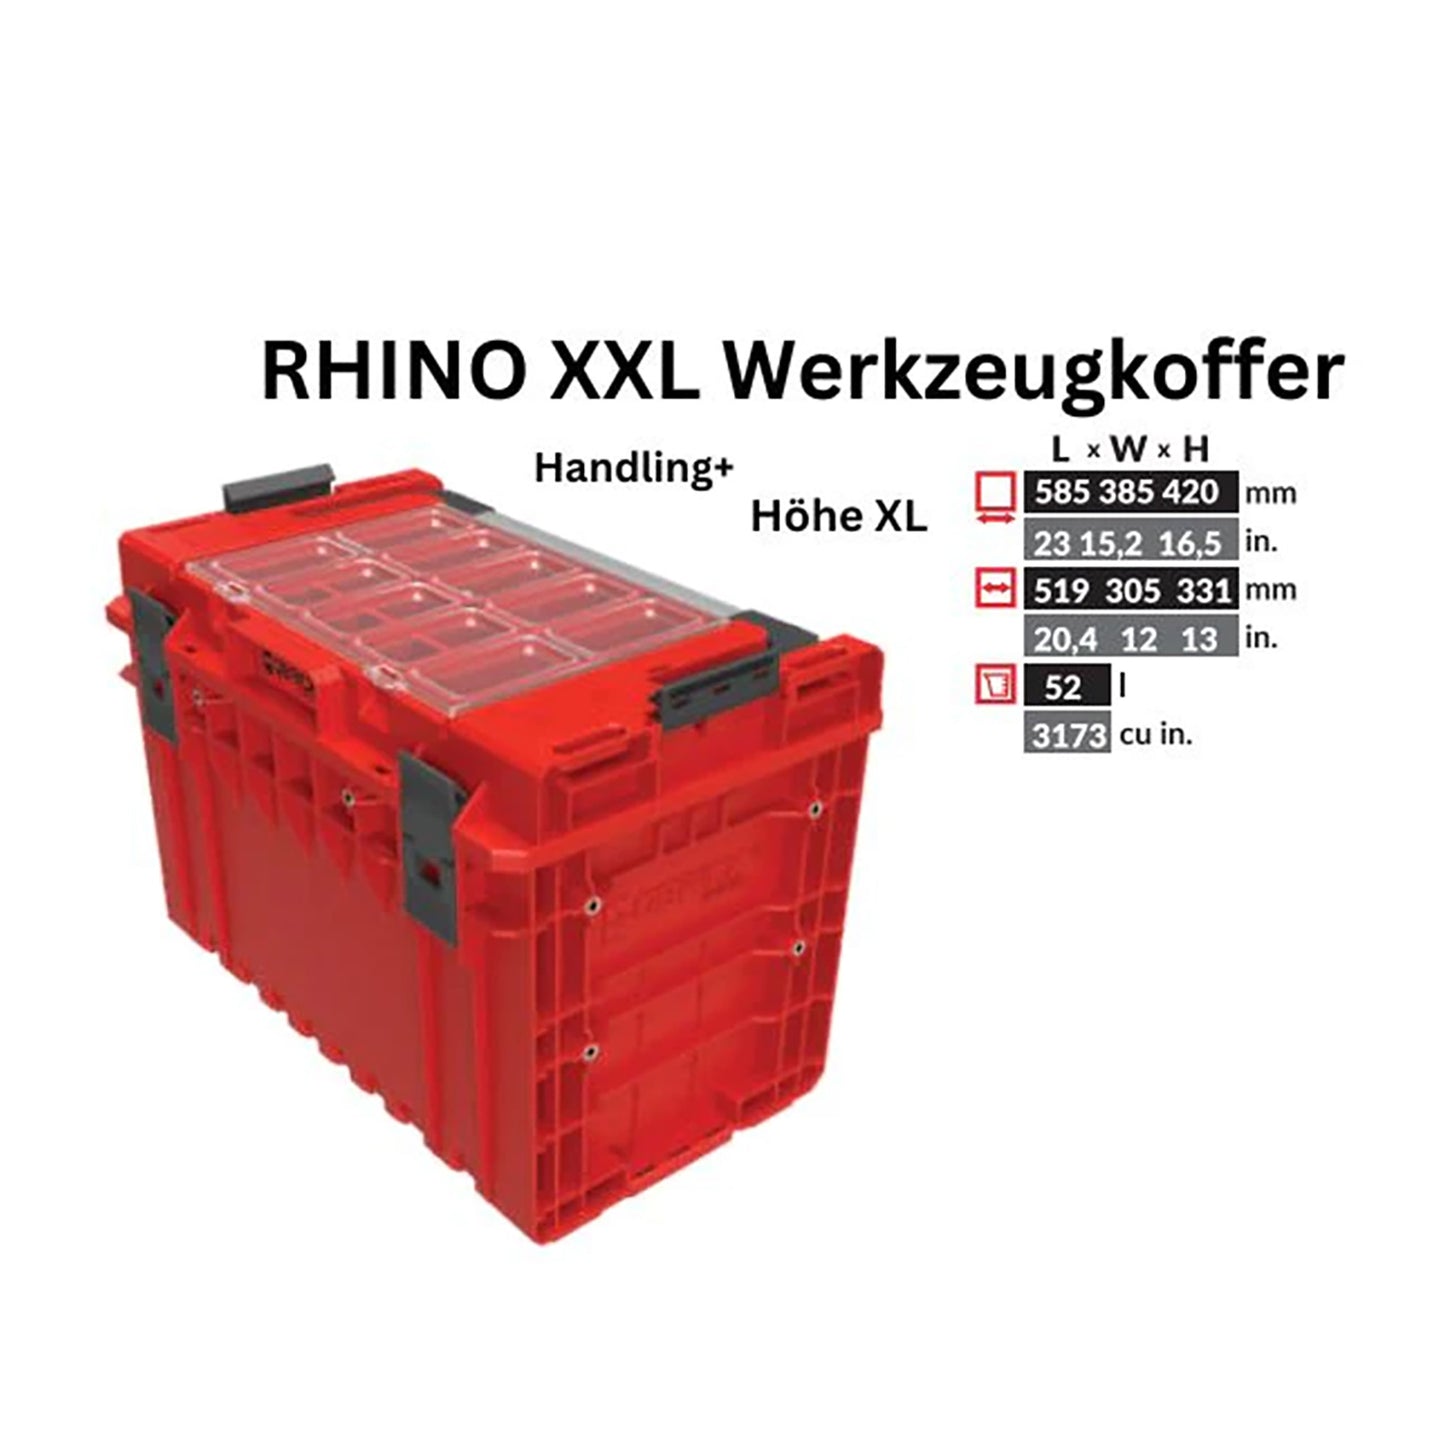 Toolbrothers RHINO XXL Werkzeugkoffer ULTRA Handling+ Höhe XL Custom modularer Organizer 585 x 385 x 420 mm 52 l stapelbar IP66